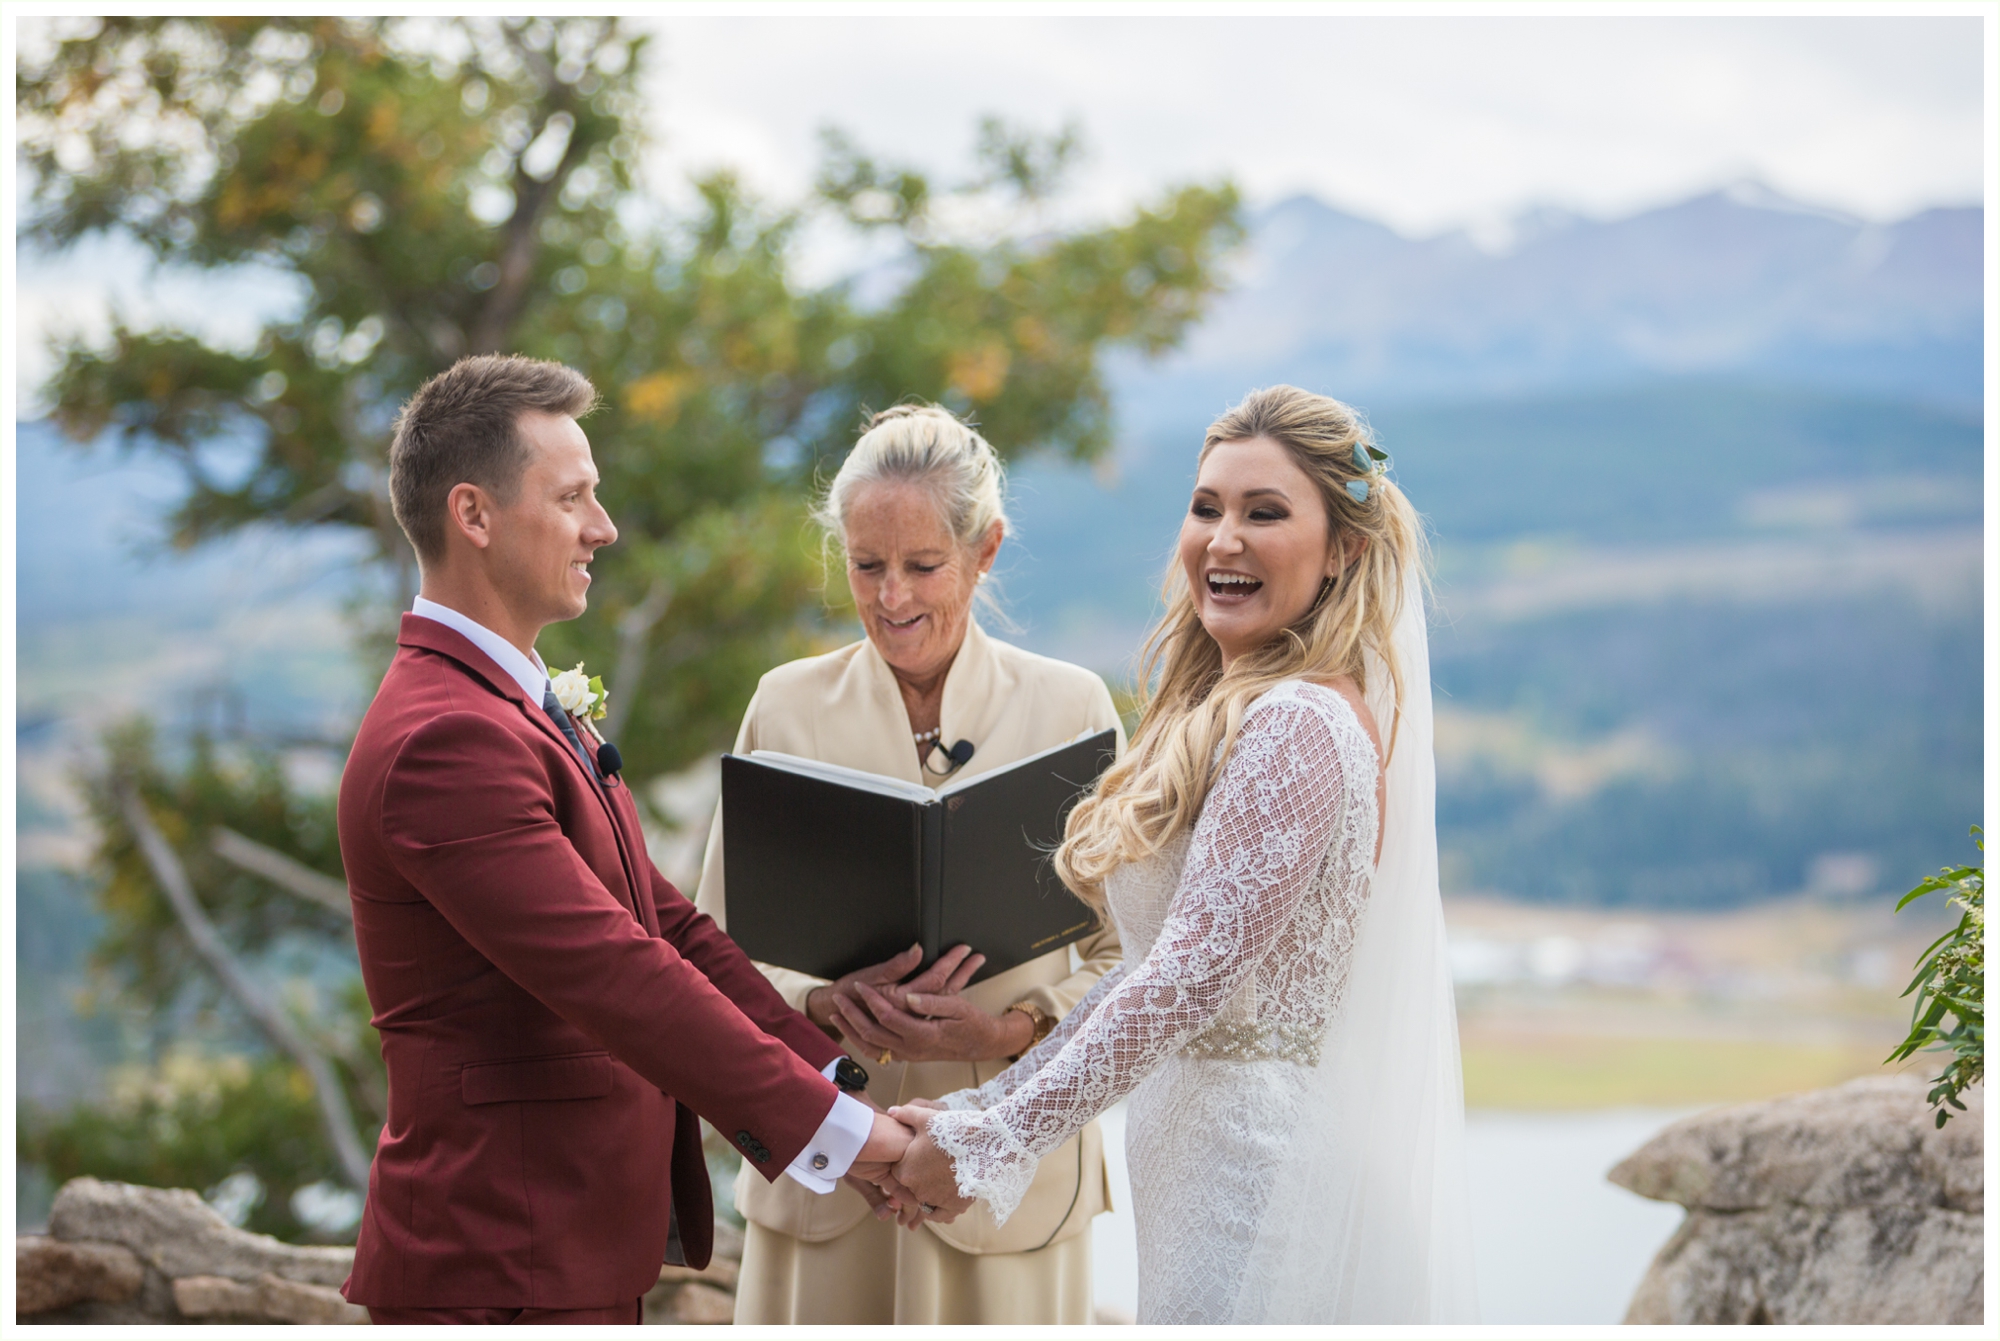 wedding ceremony in september at sapphire point overlook in breckenridge colorado happy bride